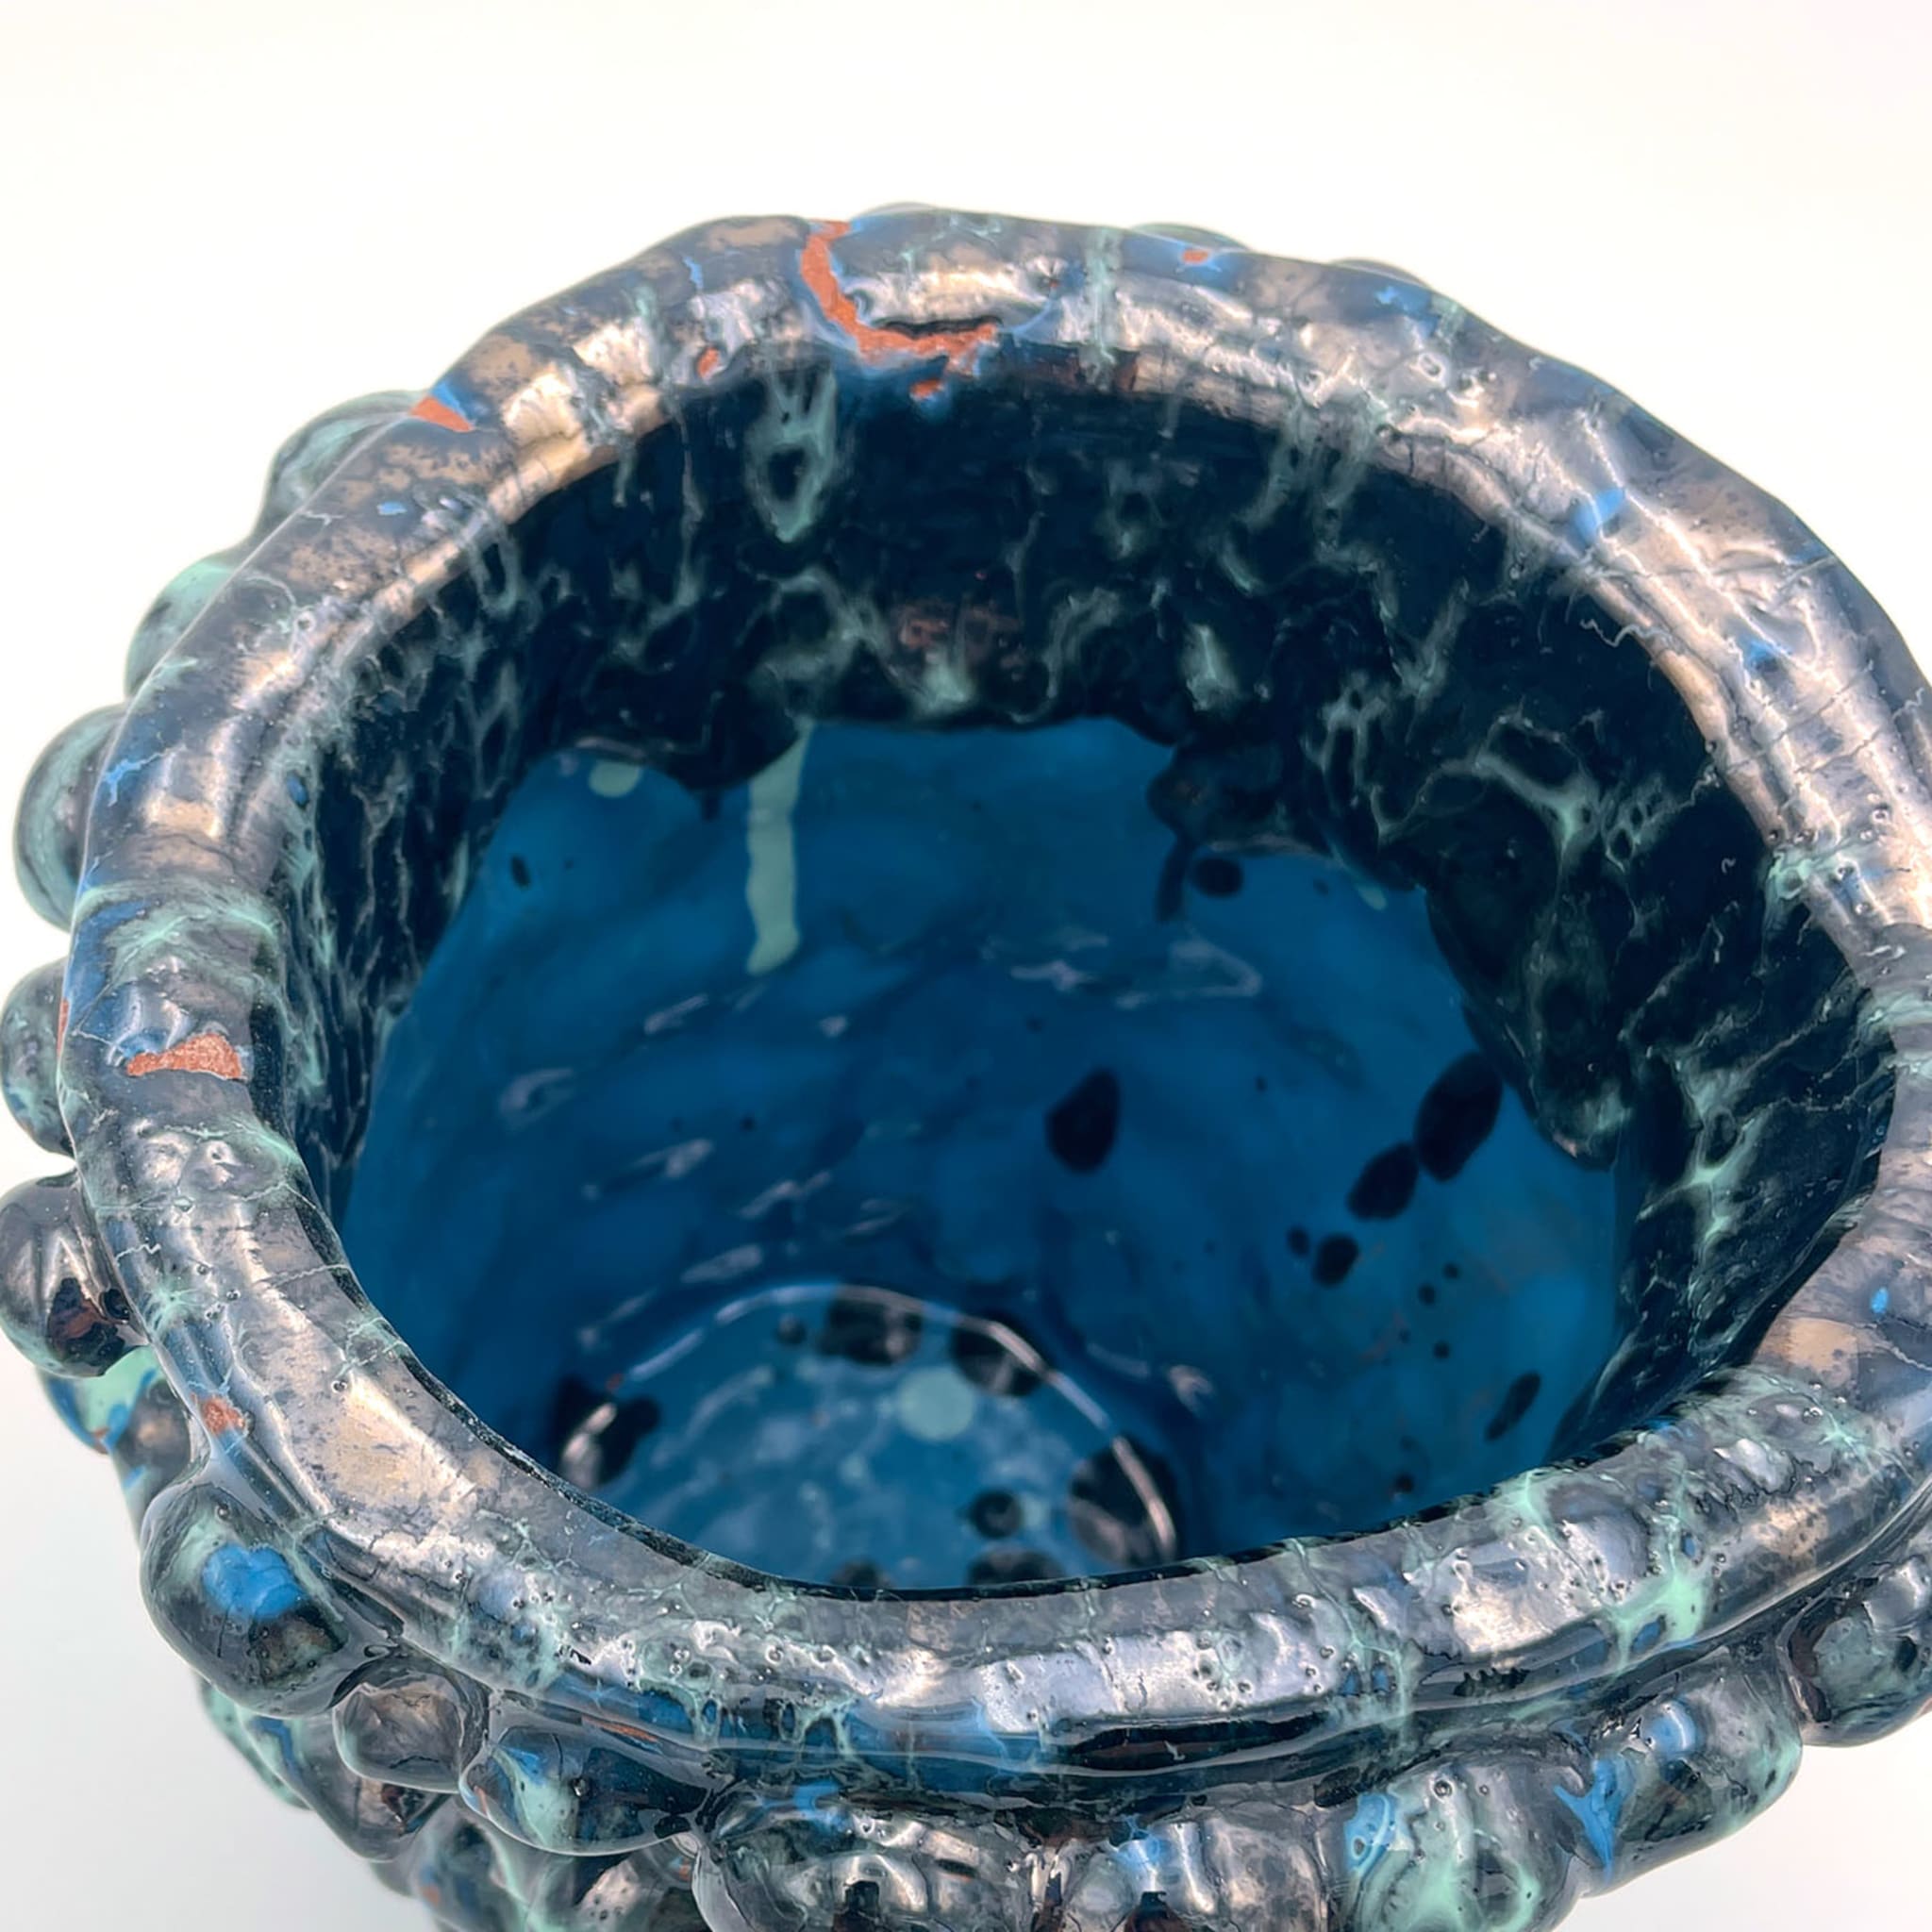 Onda Metallic Tiffany and Turquoise Vase - Alternative view 2